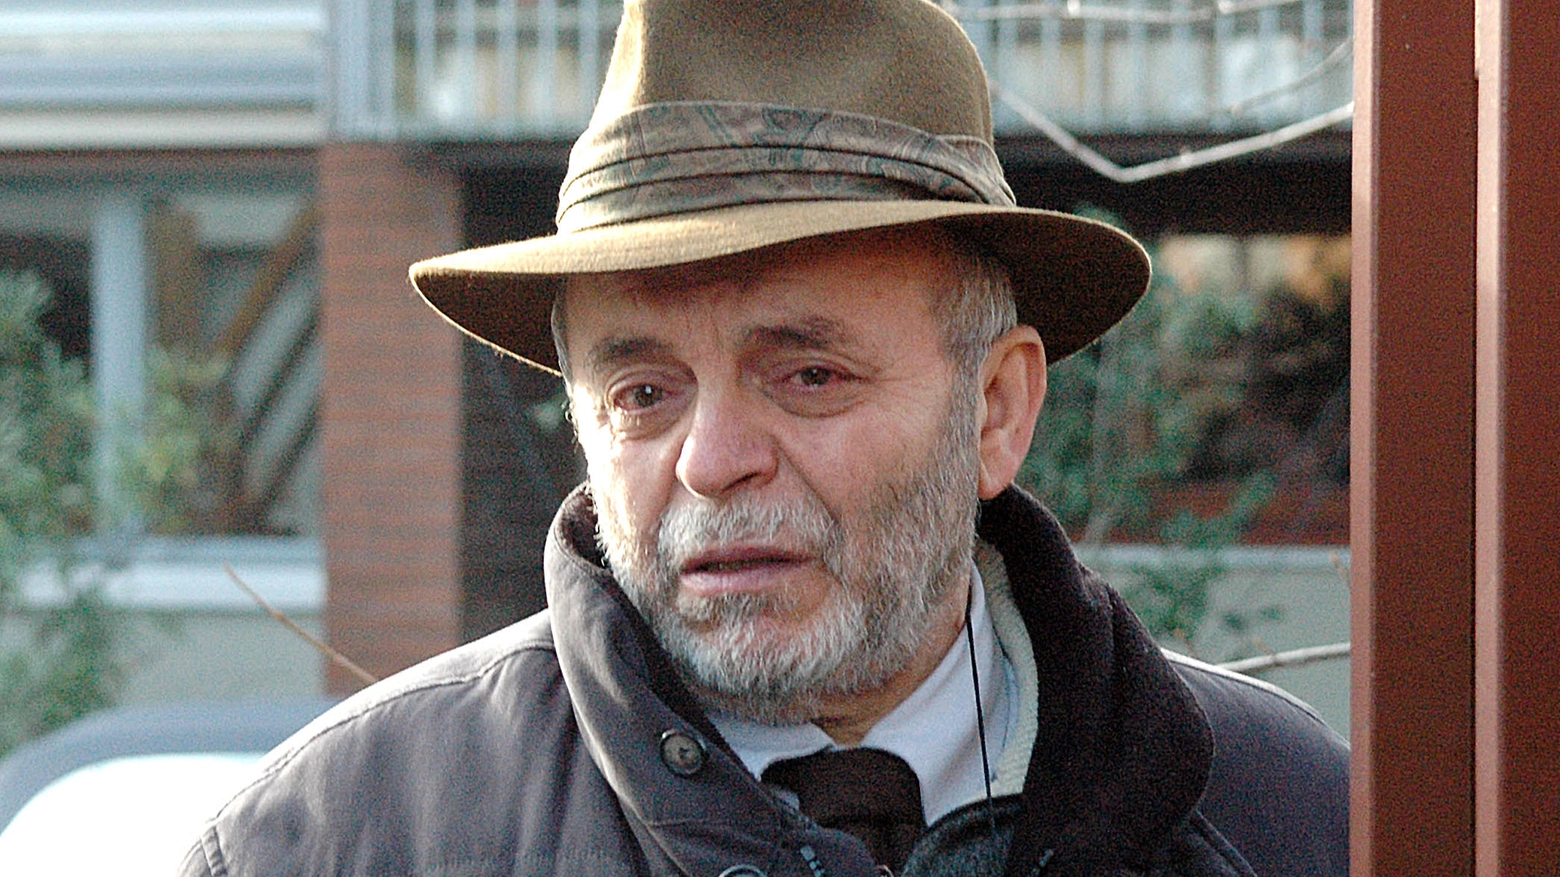 Carlo Castagna